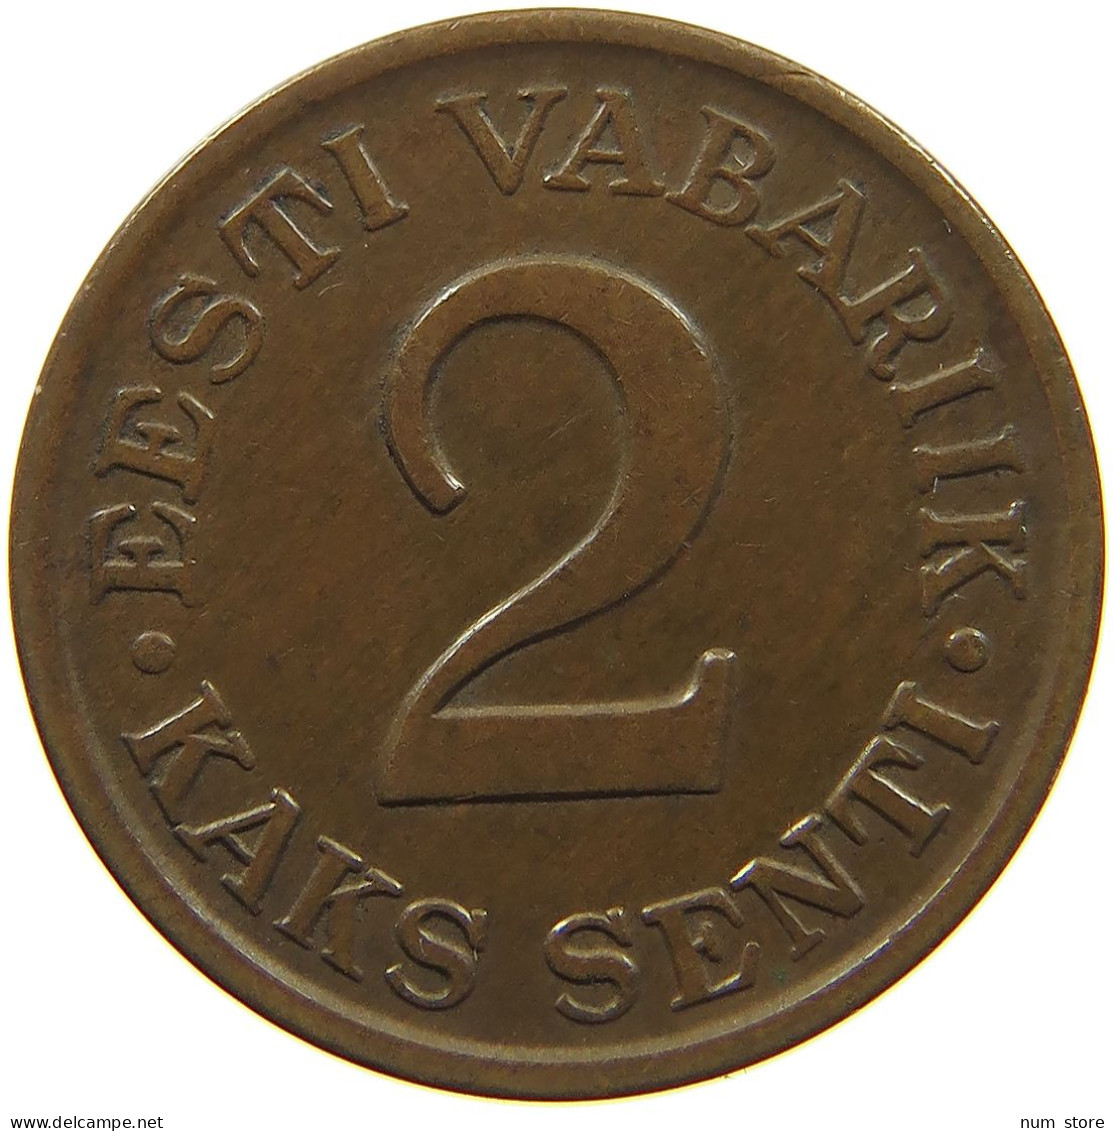 ESTONIA 2 SENTI 1934  #c011 0193 - Estland